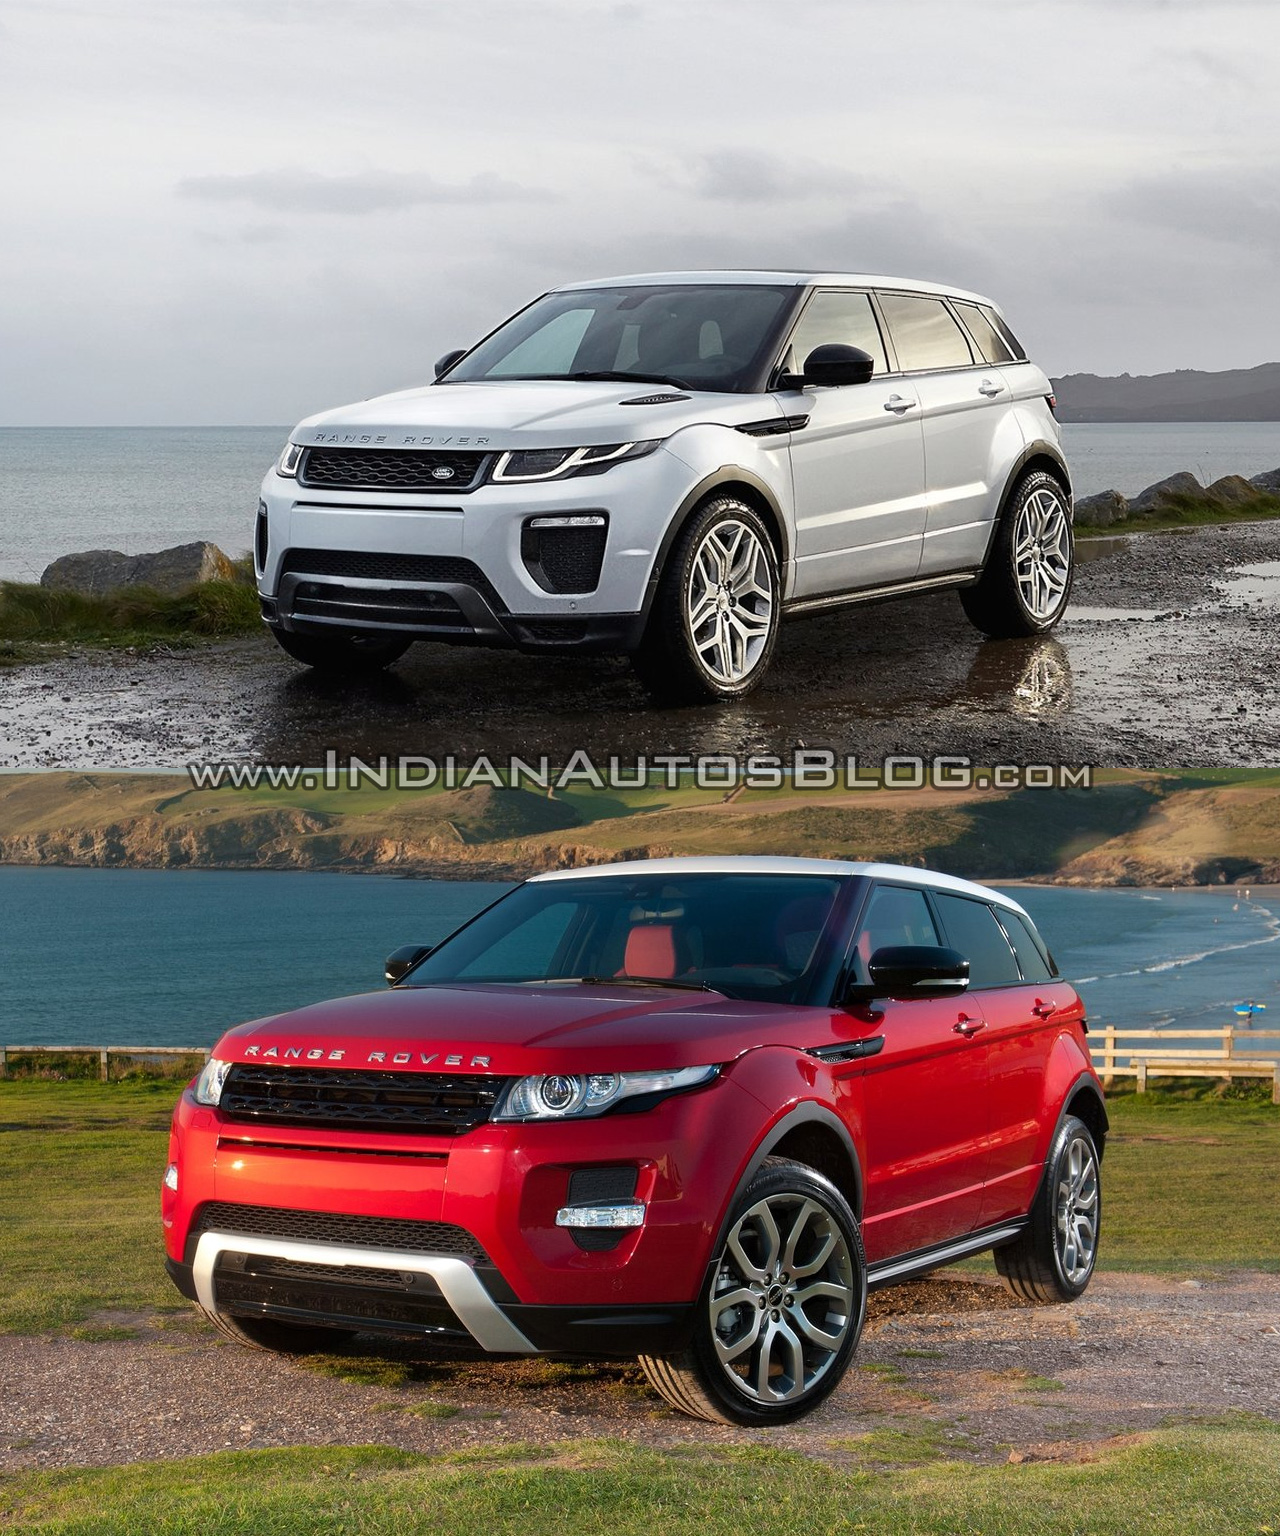 2016 Range Rover Evoque facelift vs 2015 Evoque - Old vs New